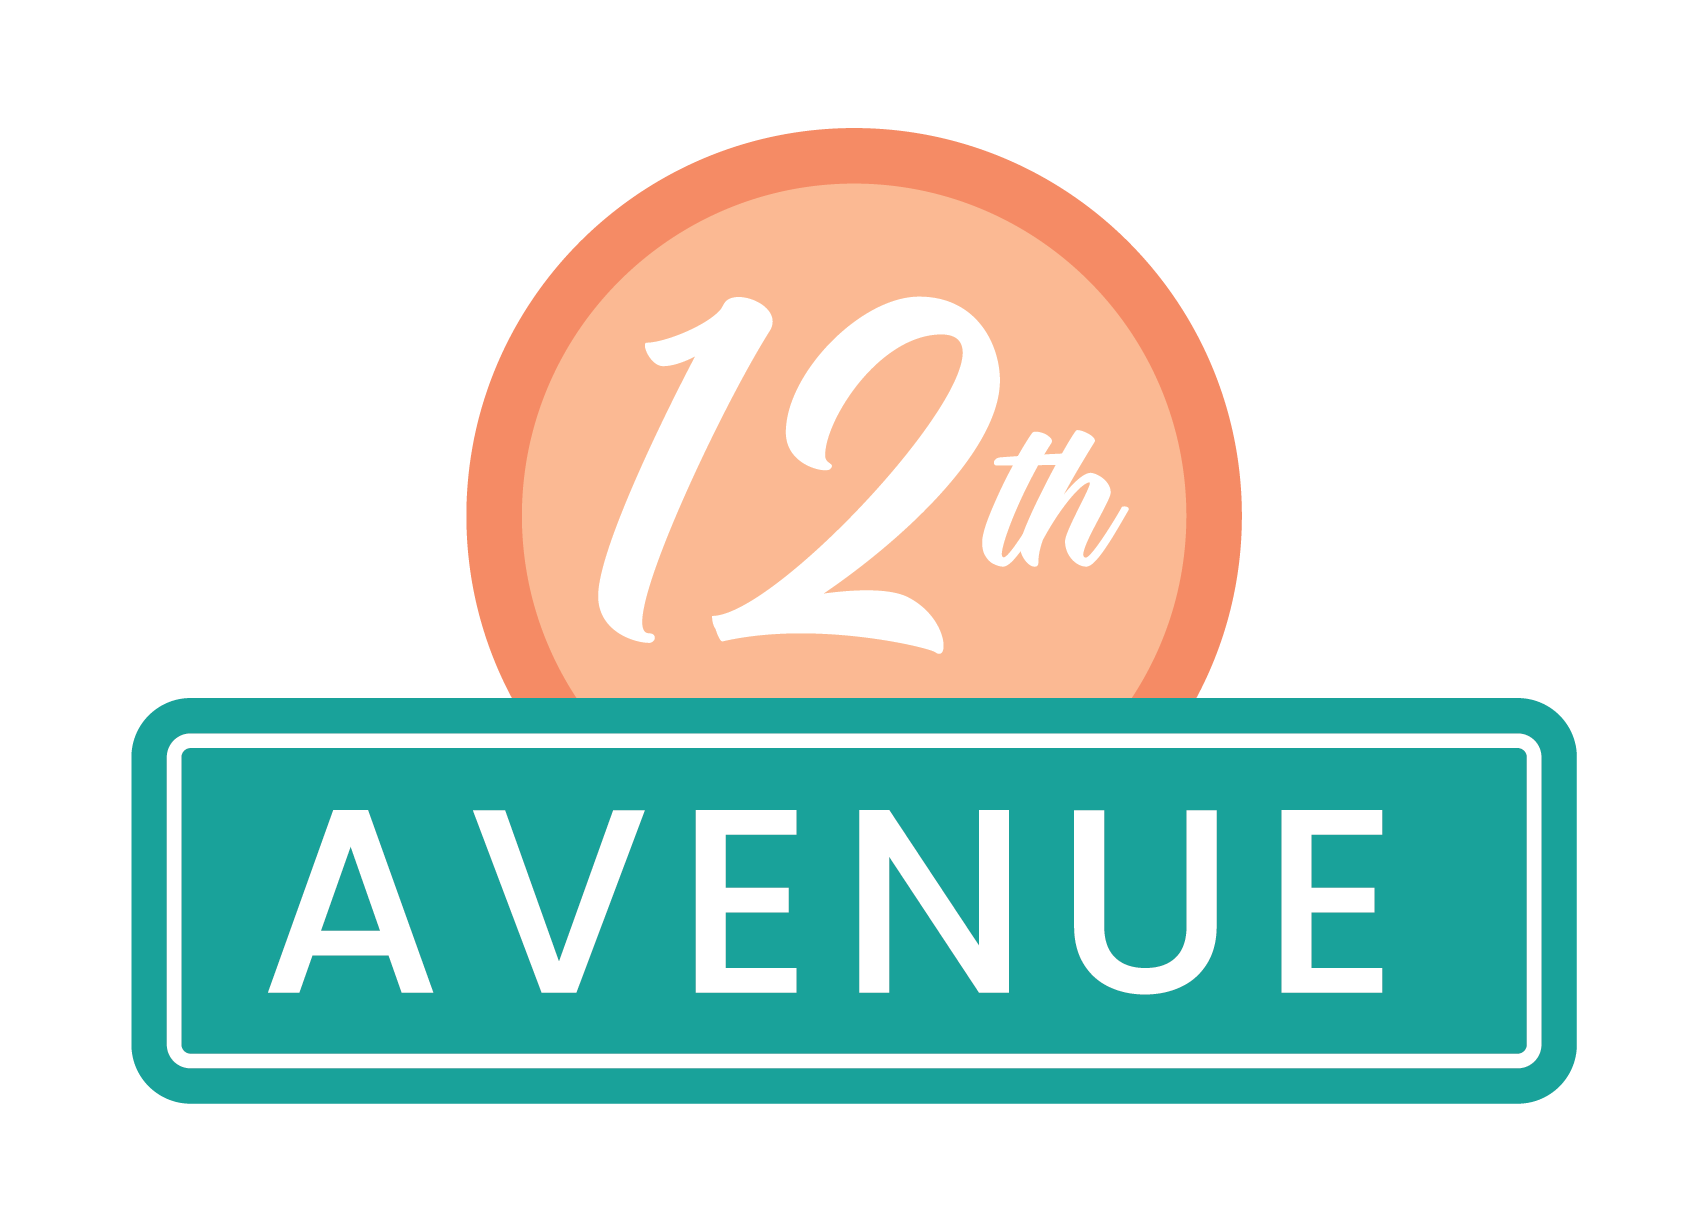 12th Avenue Housing logo